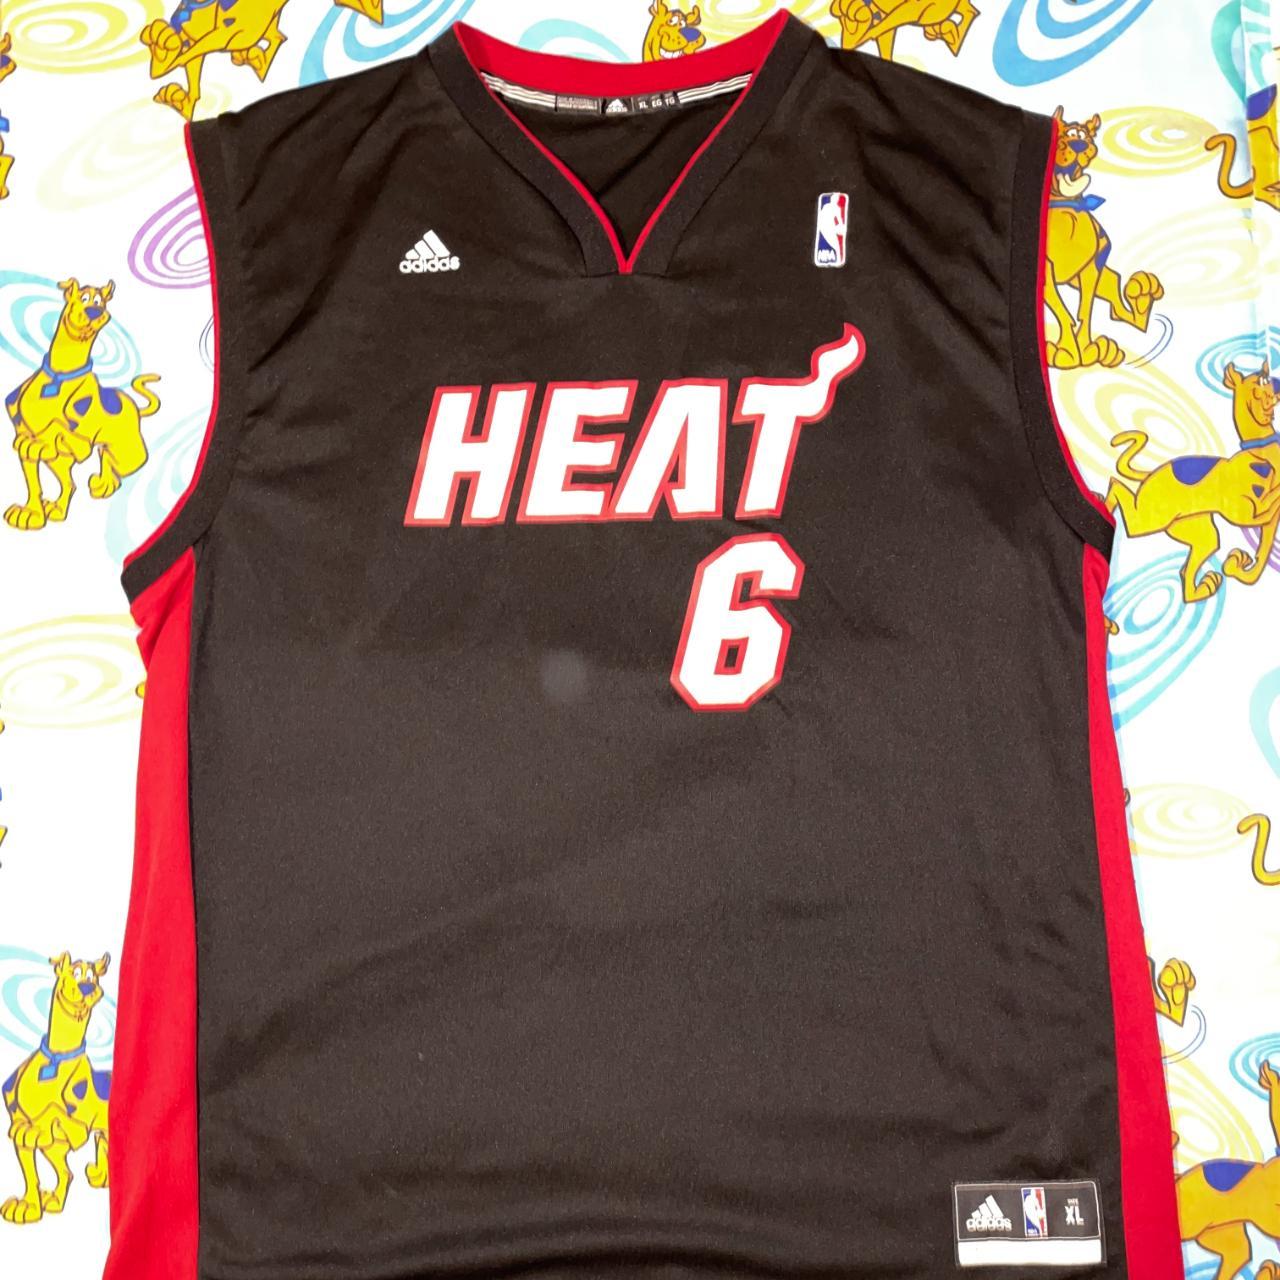 NBA - Men's Miami Heat Lebron James Jersey 